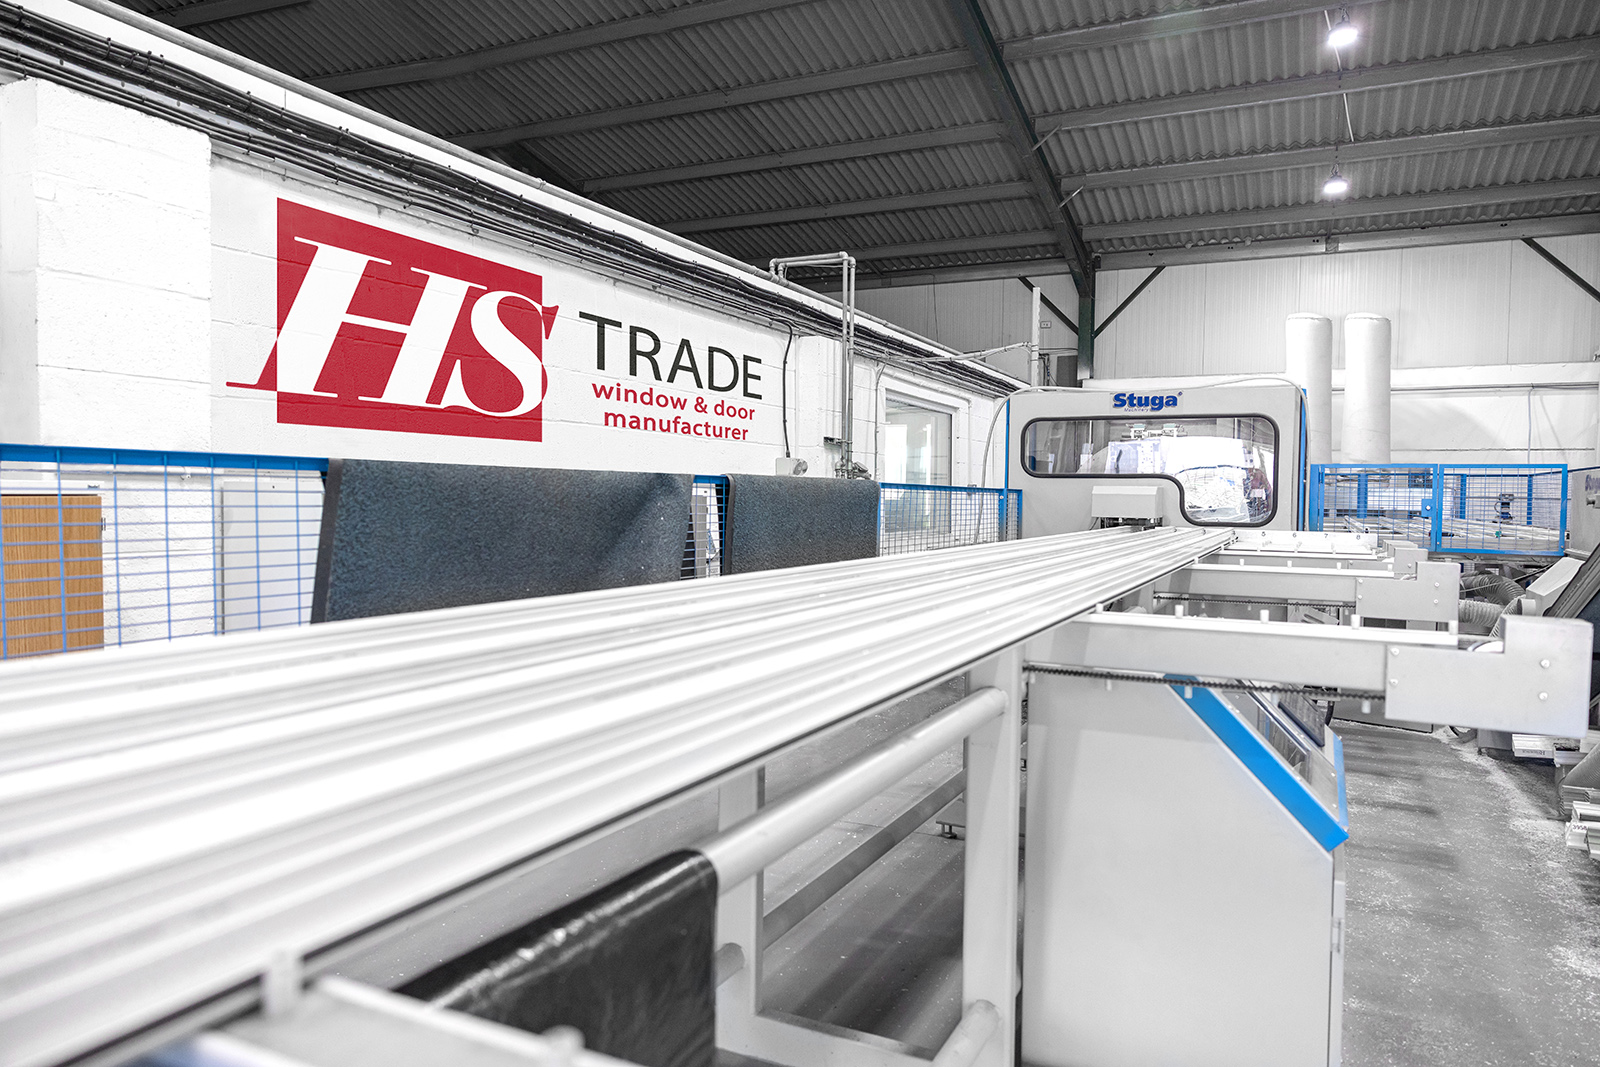 Trade window and door manufacturer and supplier UK